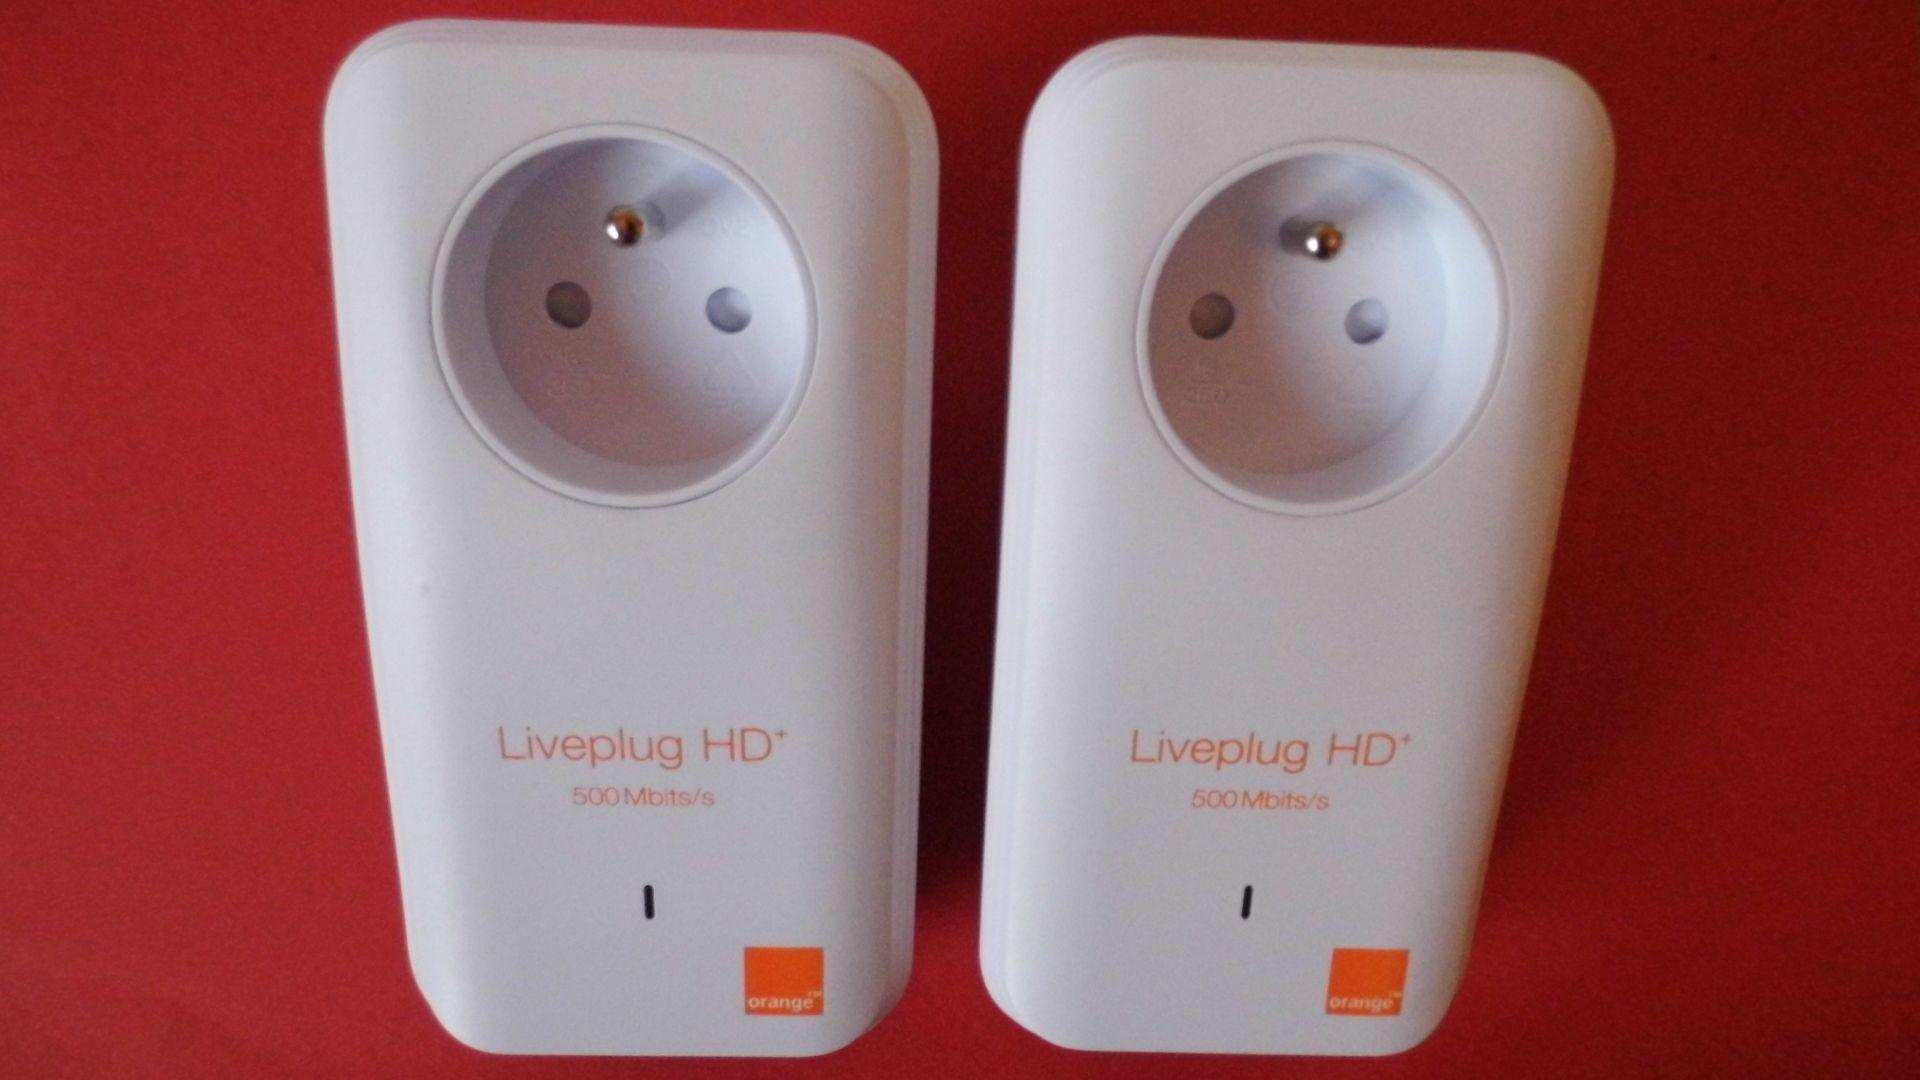 Liveplug HD 500Mbits/s Orange - Informatique | Rakuten